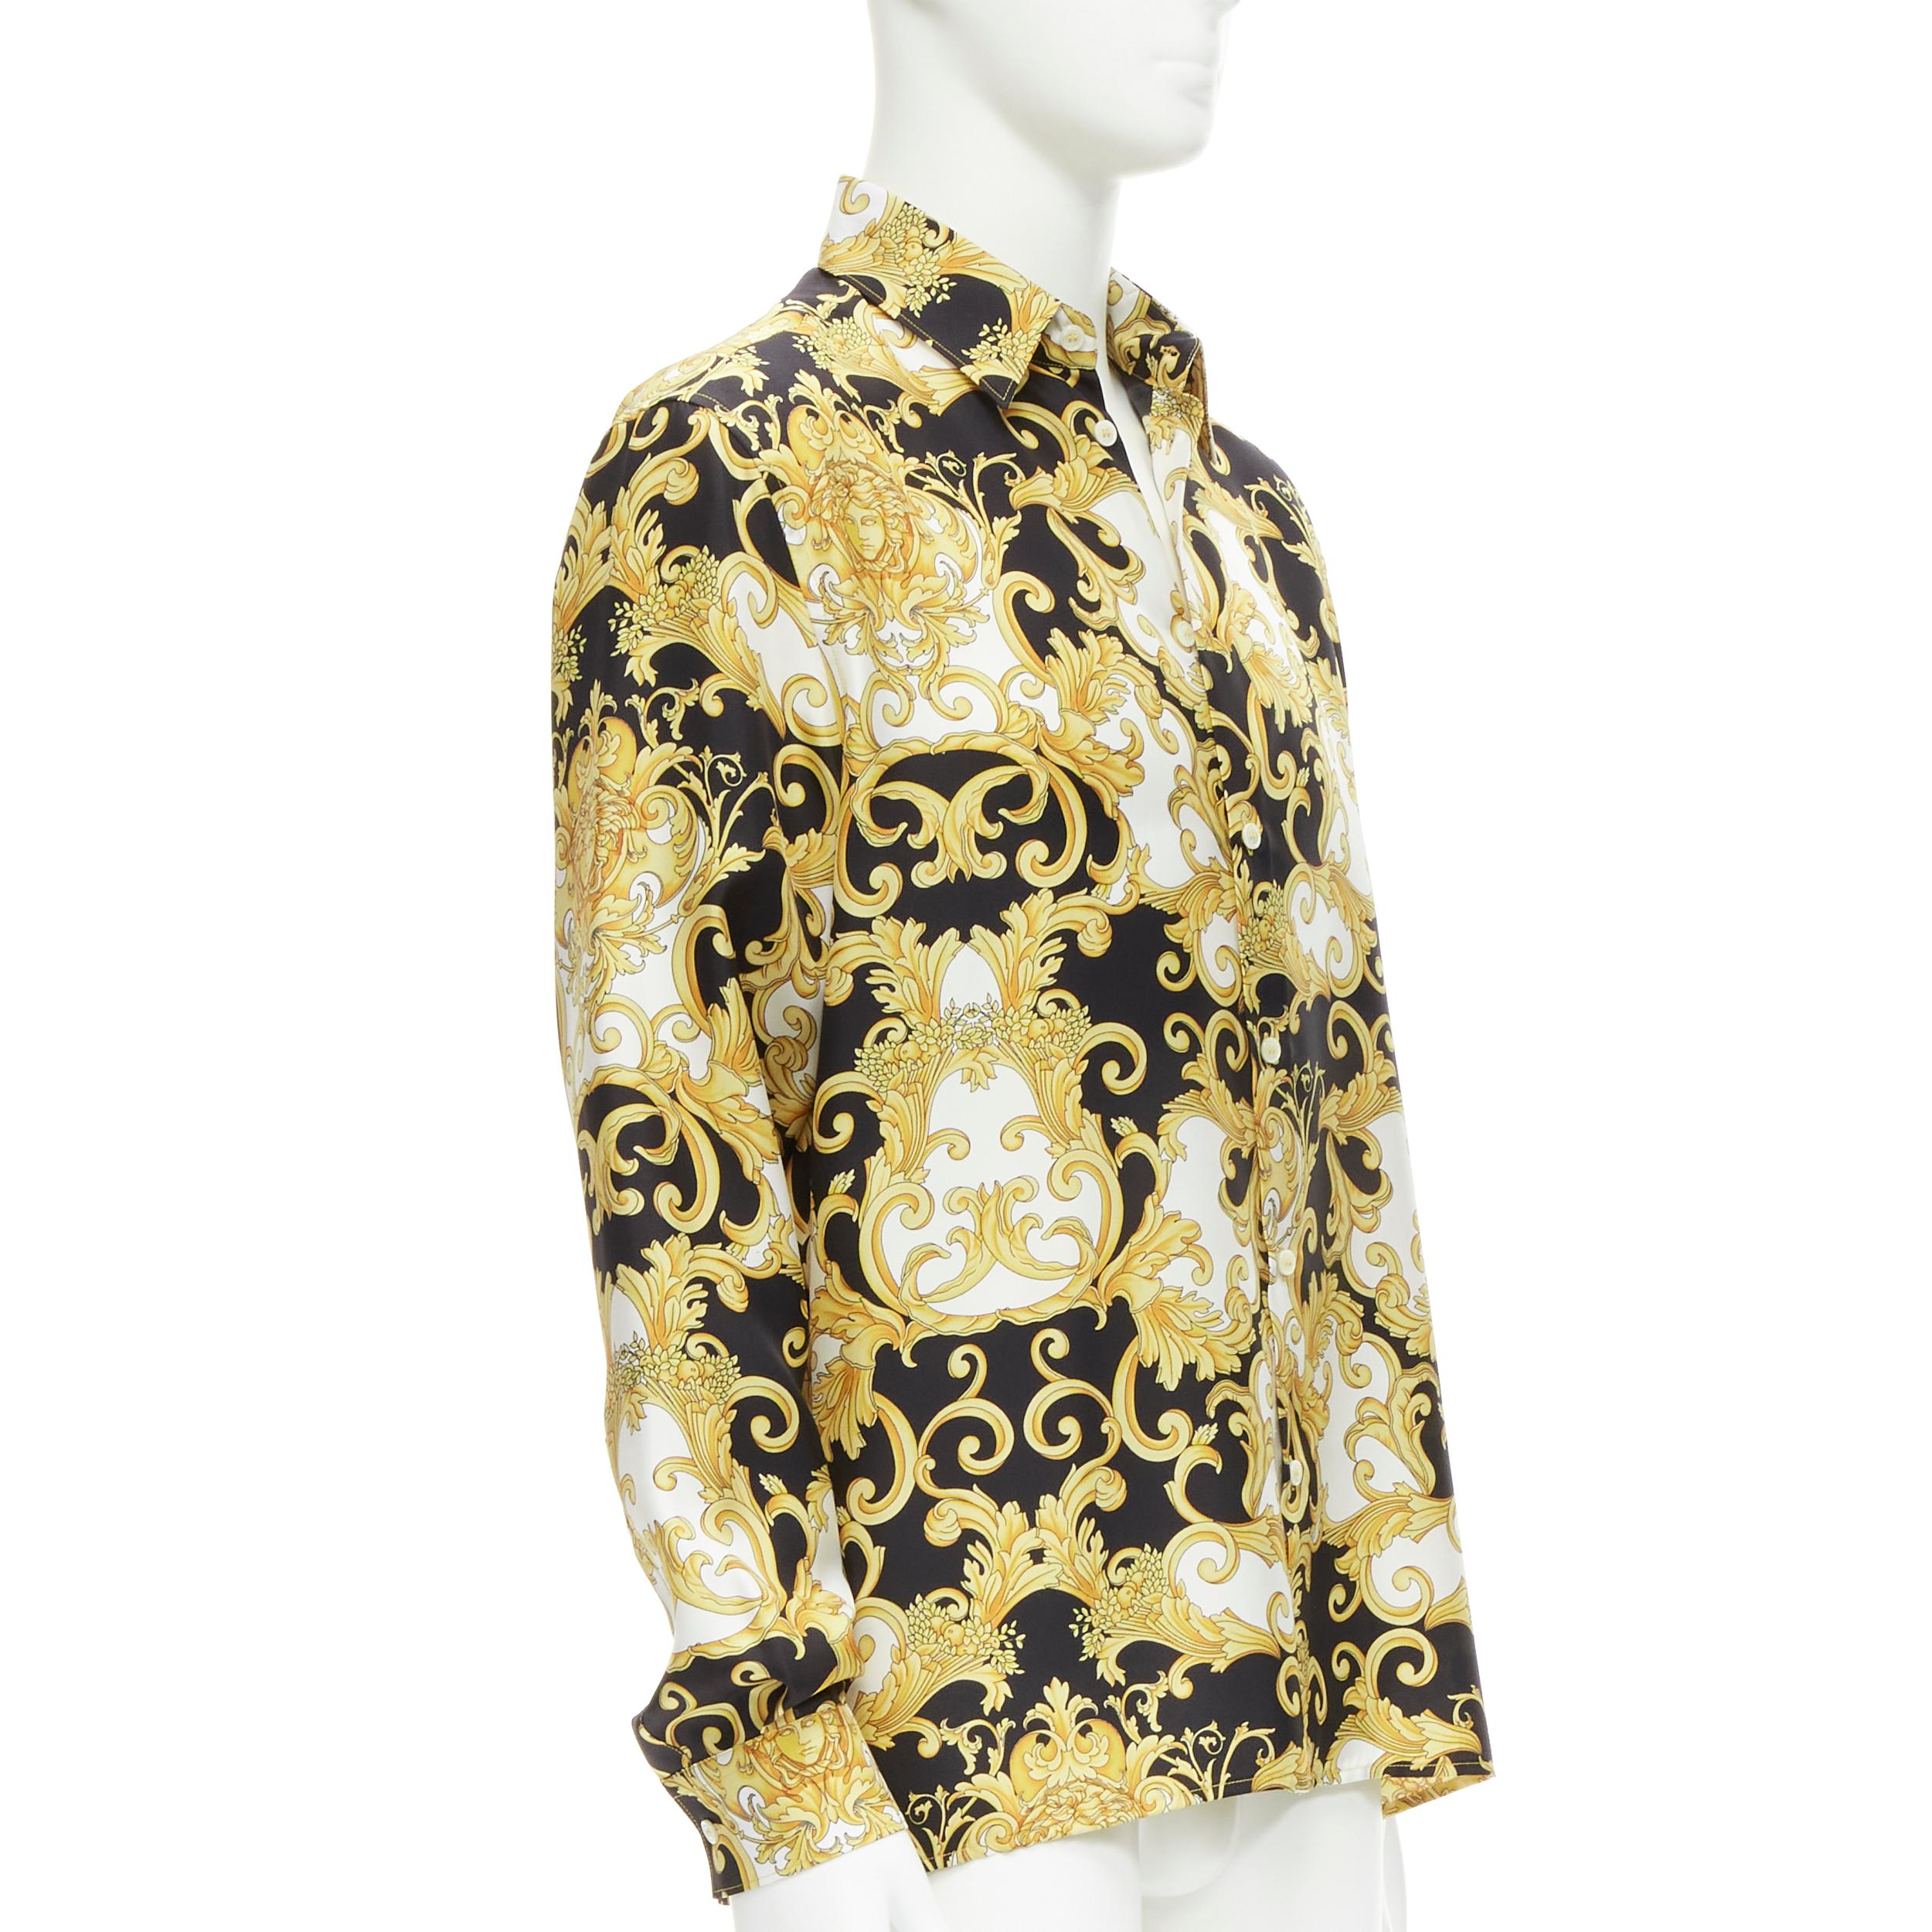 new VERSACE 2022 Renaissance Barocco 100% silk gold signature shirt IT52 XL
Reference: TGAS/C01815
Brand: Versace
Designer: Donatella Versace
Model: 1005026 1A05911 5B070
Collection: 2022
Material: Silk
Color: Multicolour
Pattern: Floral
Closure: